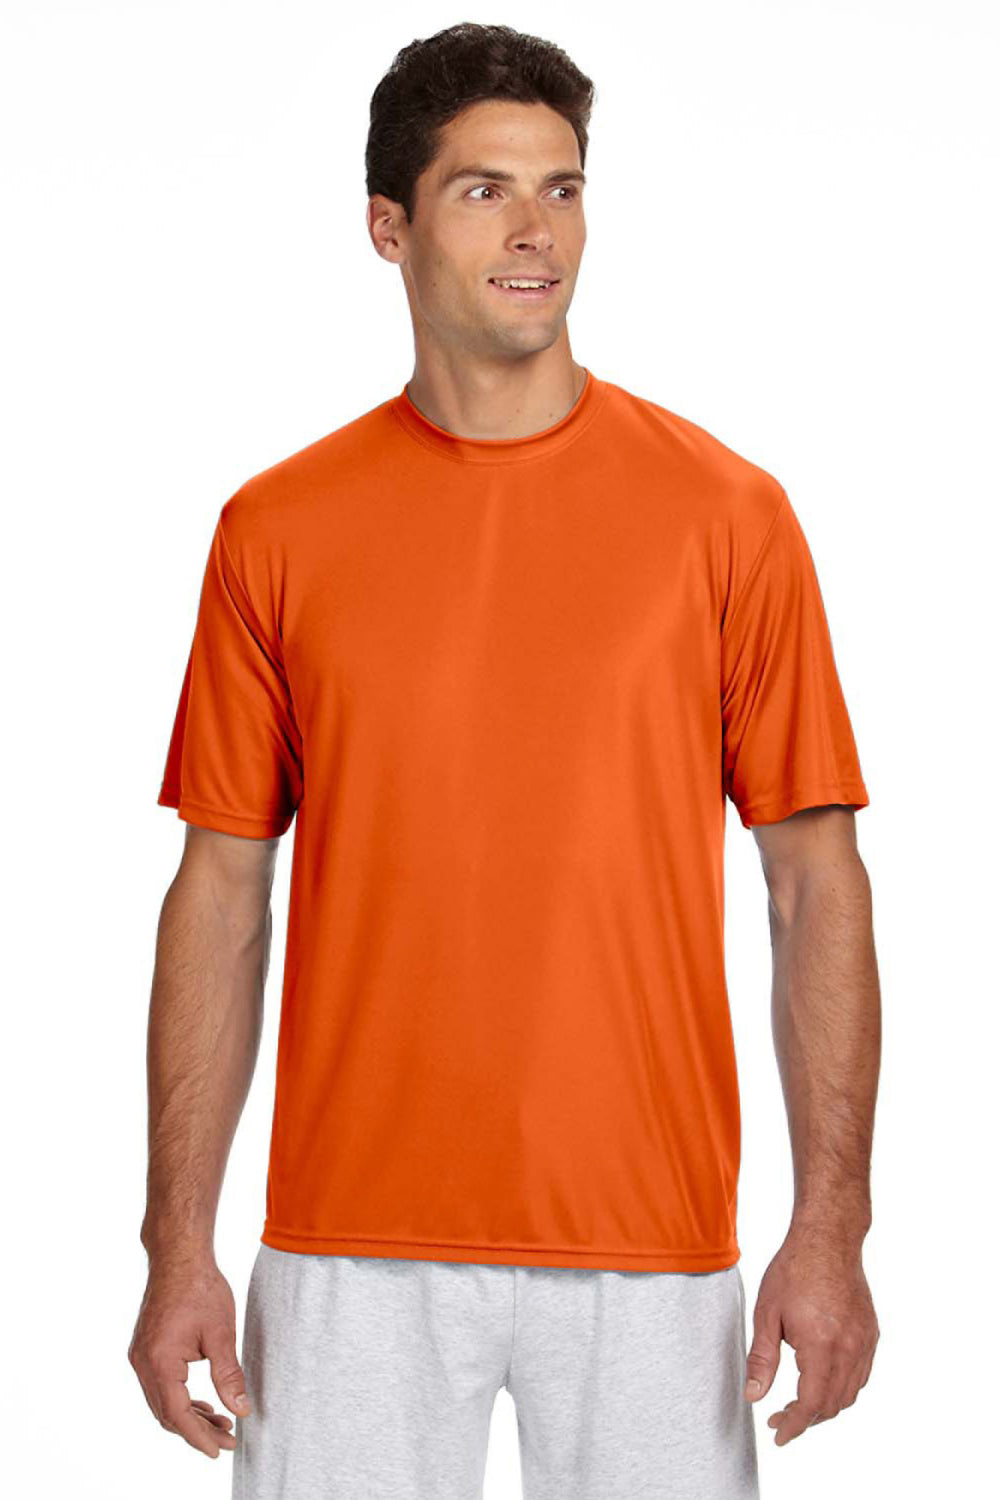 A4 N3142 Mens Performance Moisture Wicking Short Sleeve Crewneck T-Shirt Orange Model Front